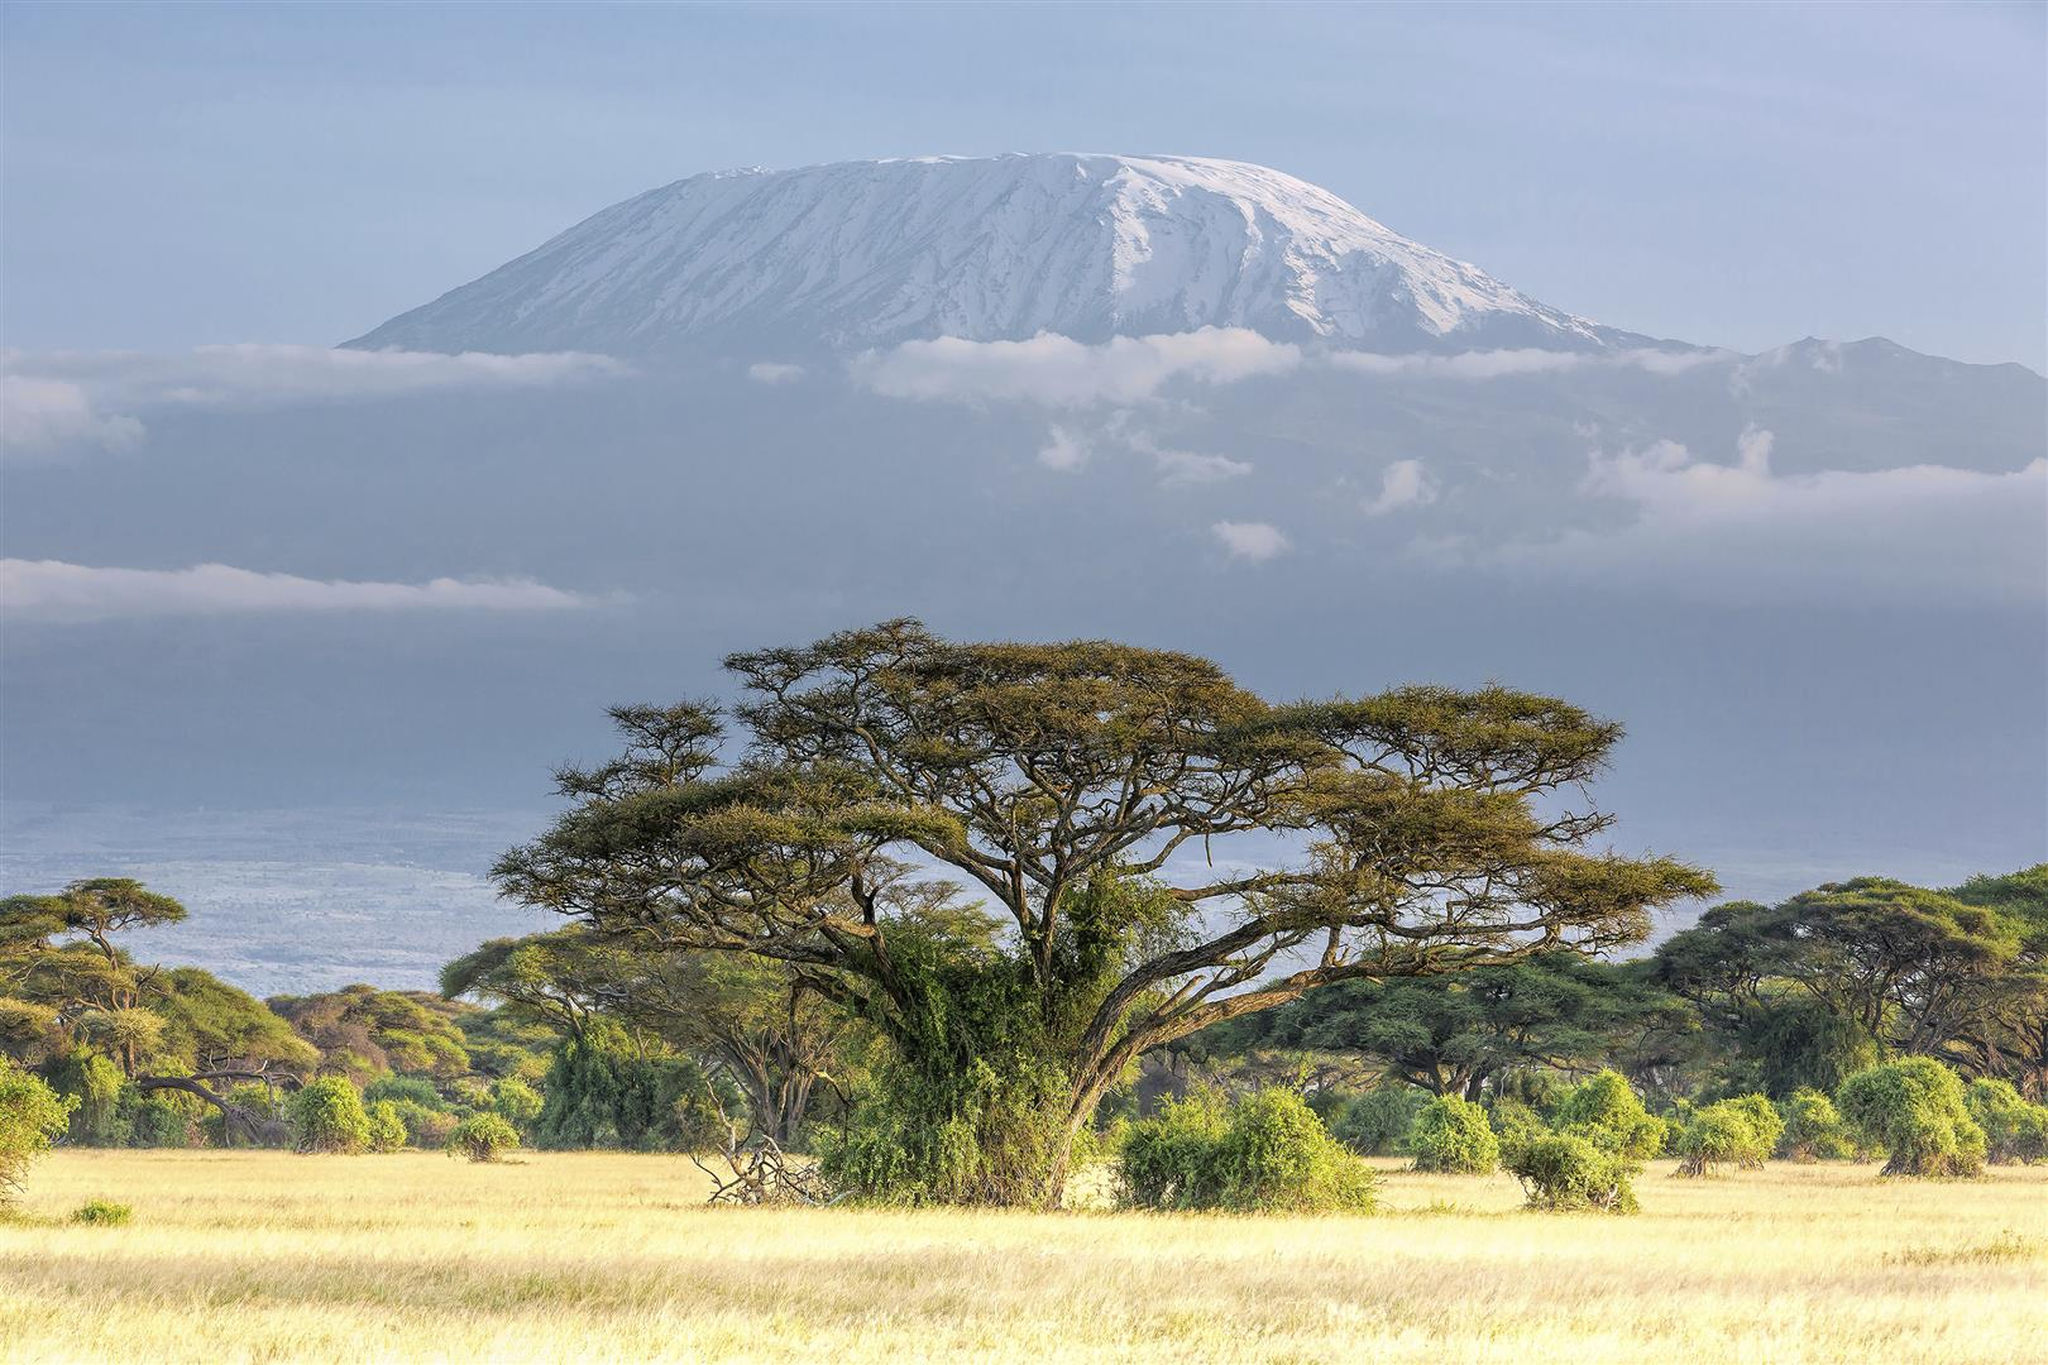 mt-kilimanjaro-landscape-tanzania.jpg